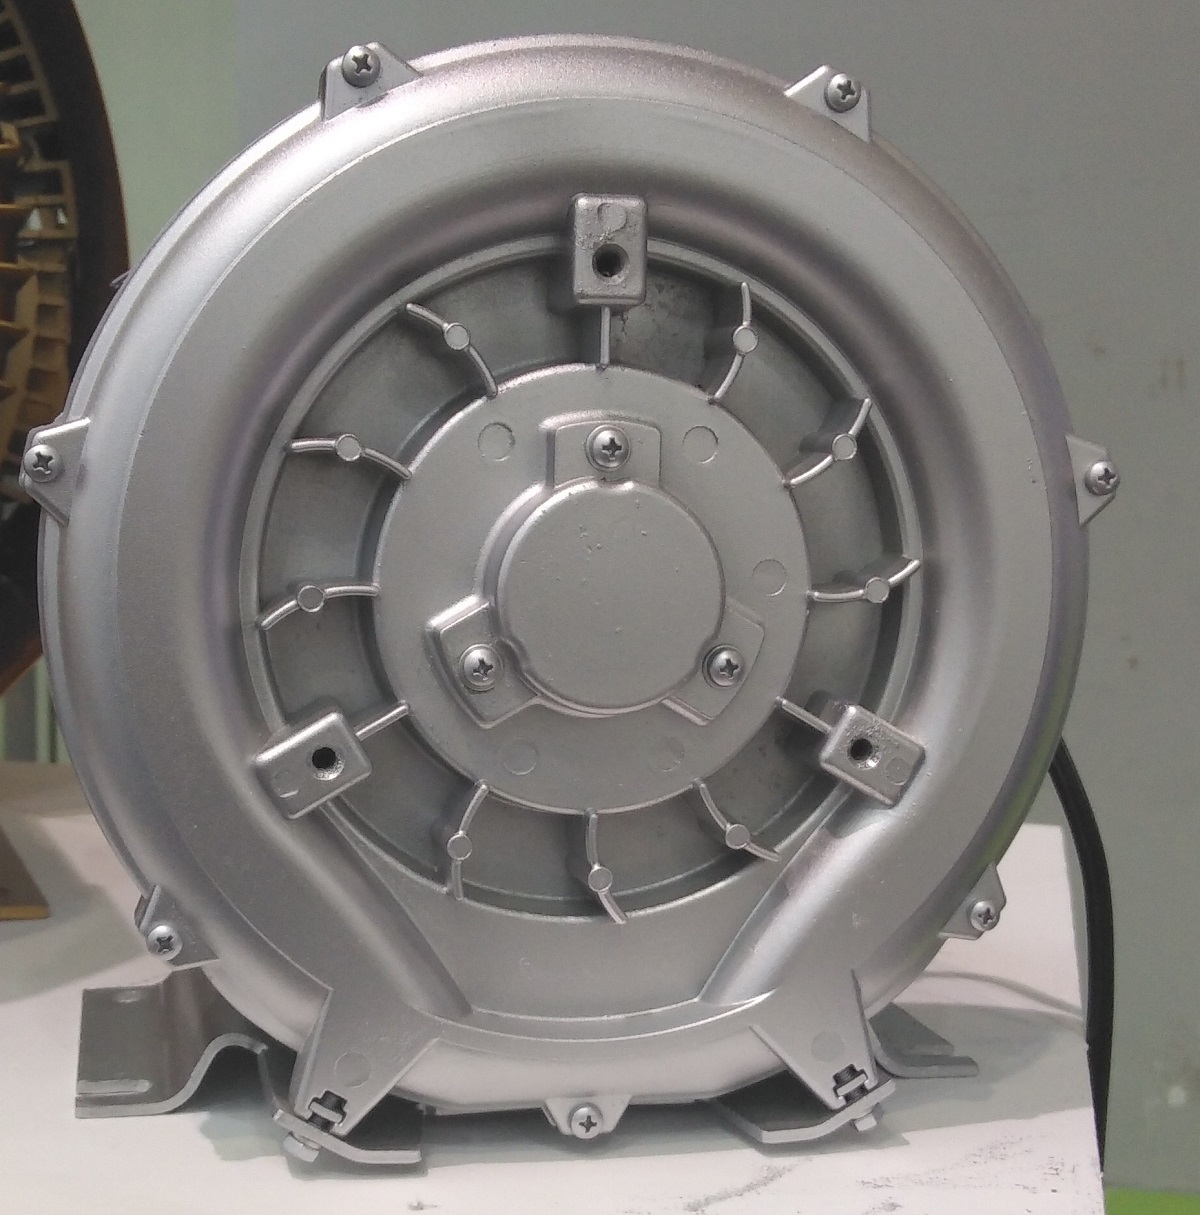 Powerful Three Phase turbine blower for CNC engraving machine